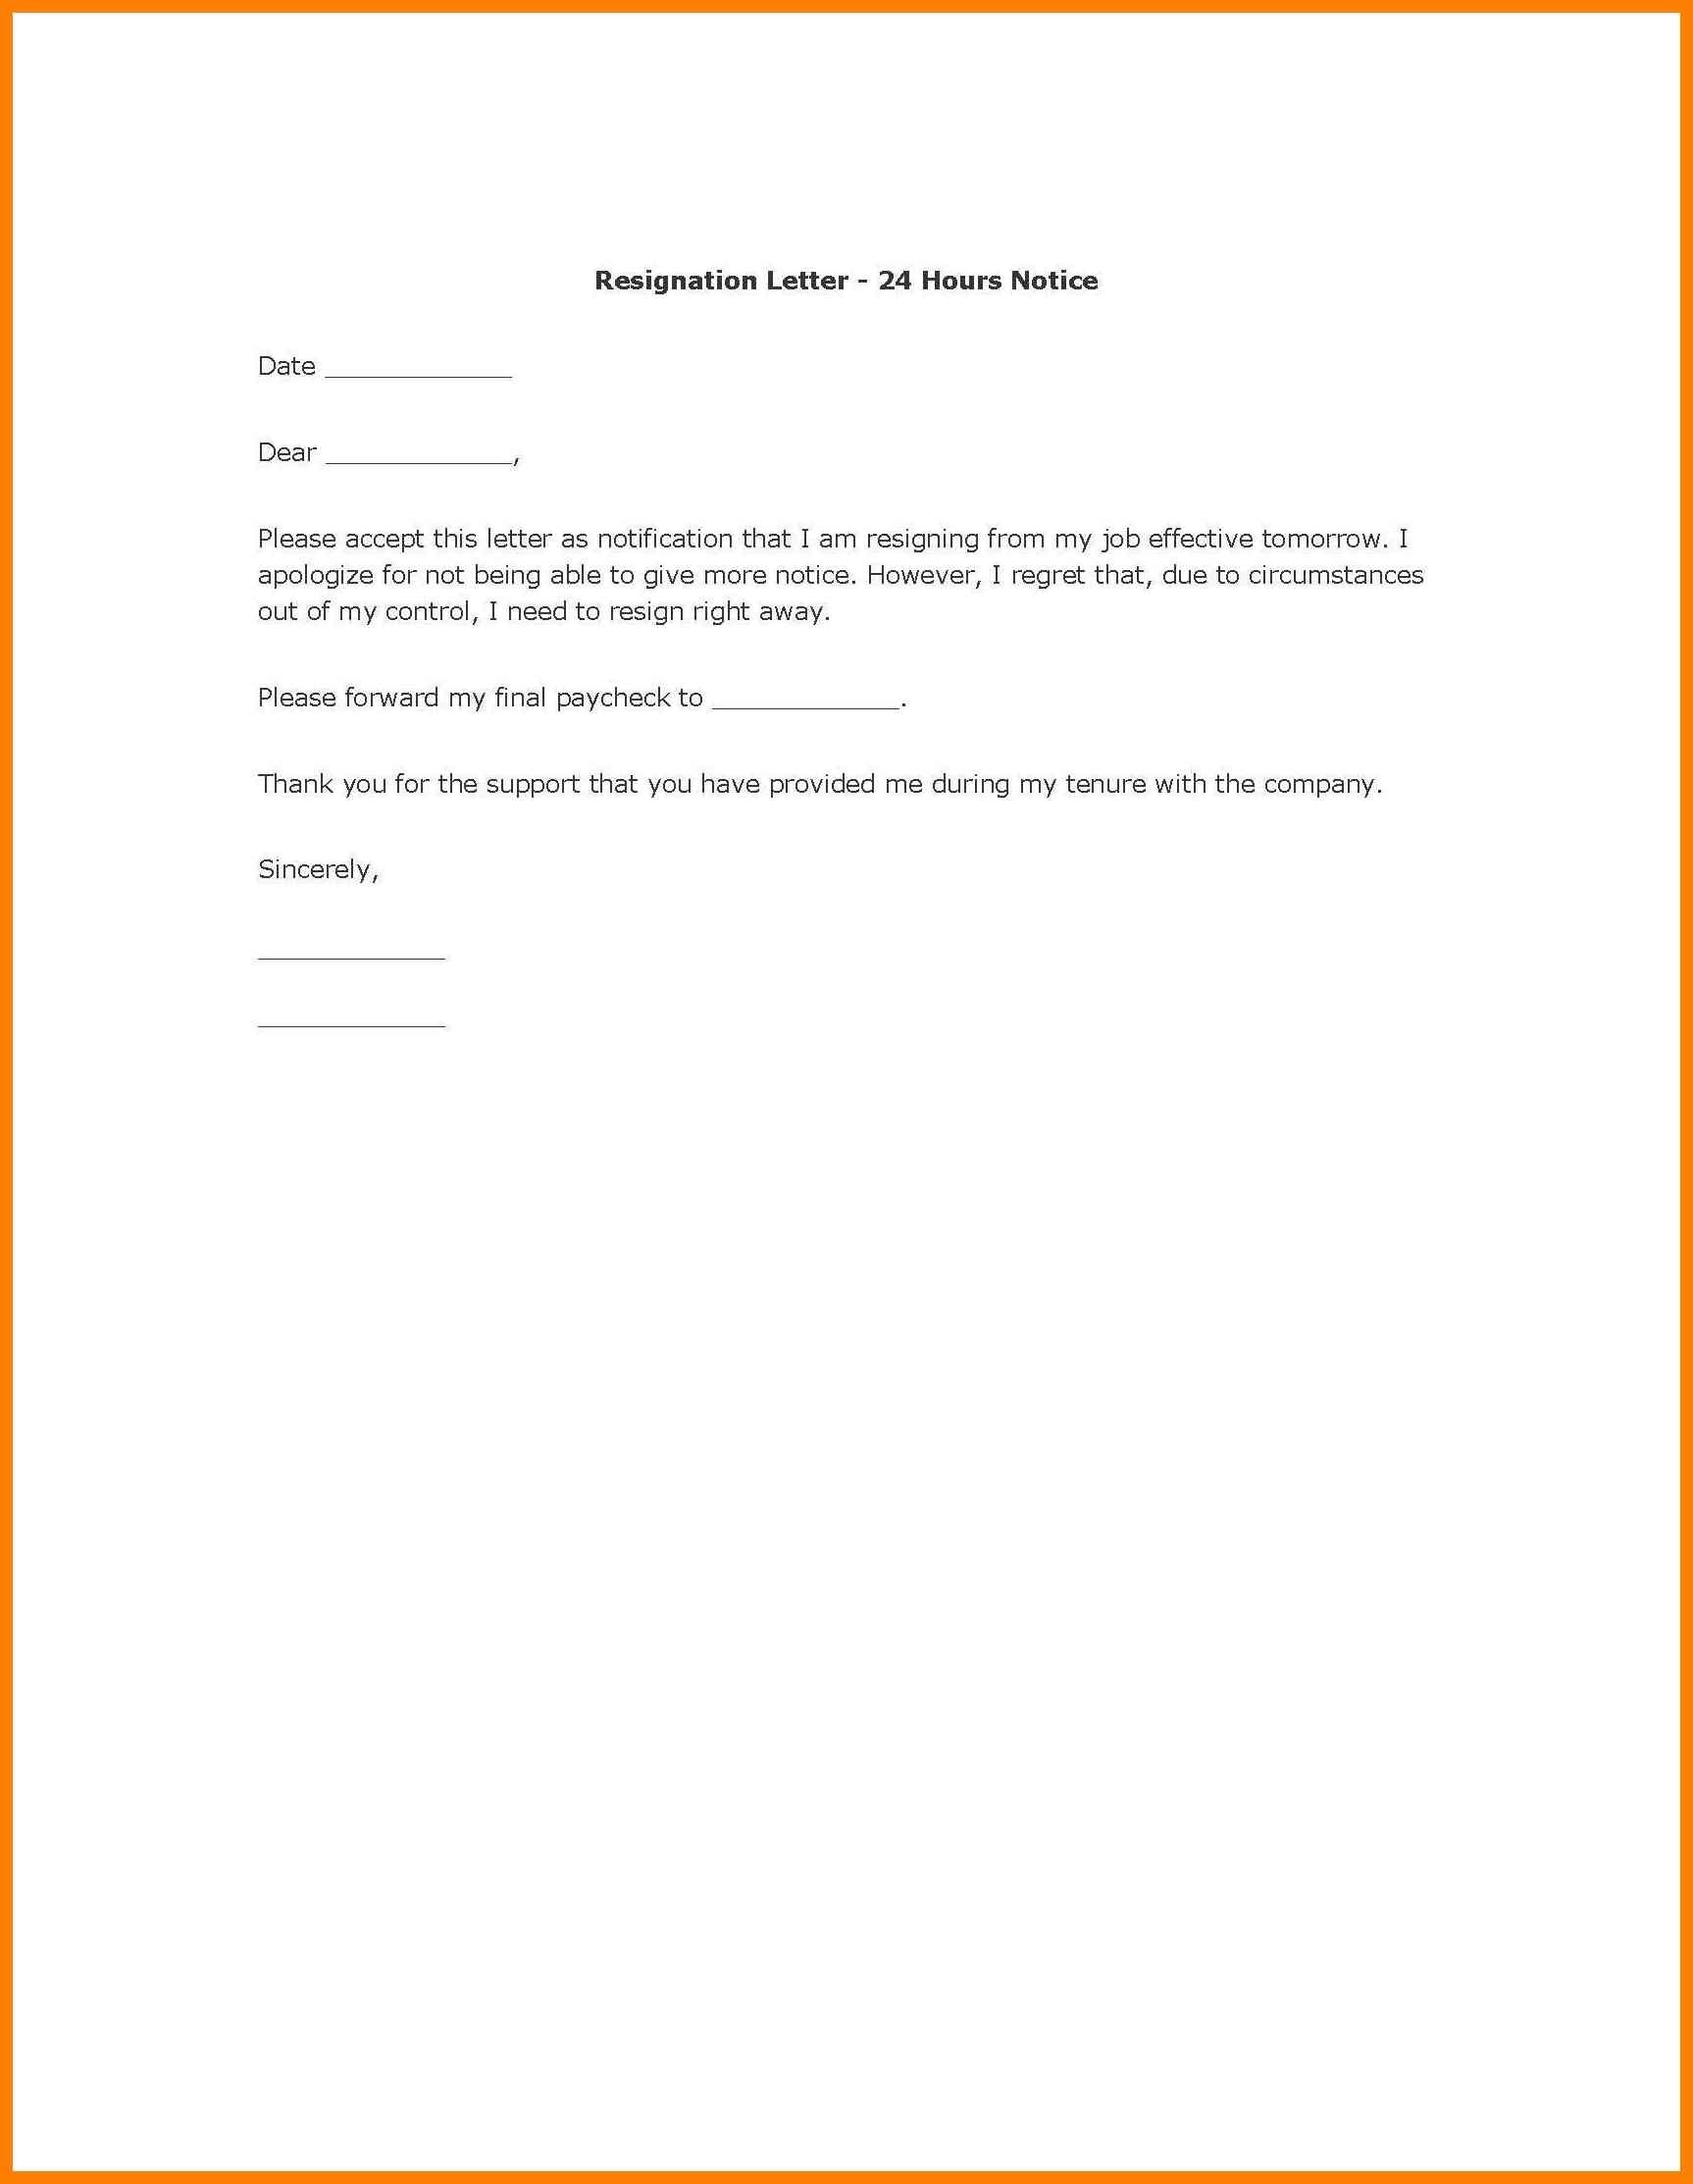 Copy Of Resignation Letter | scrumps